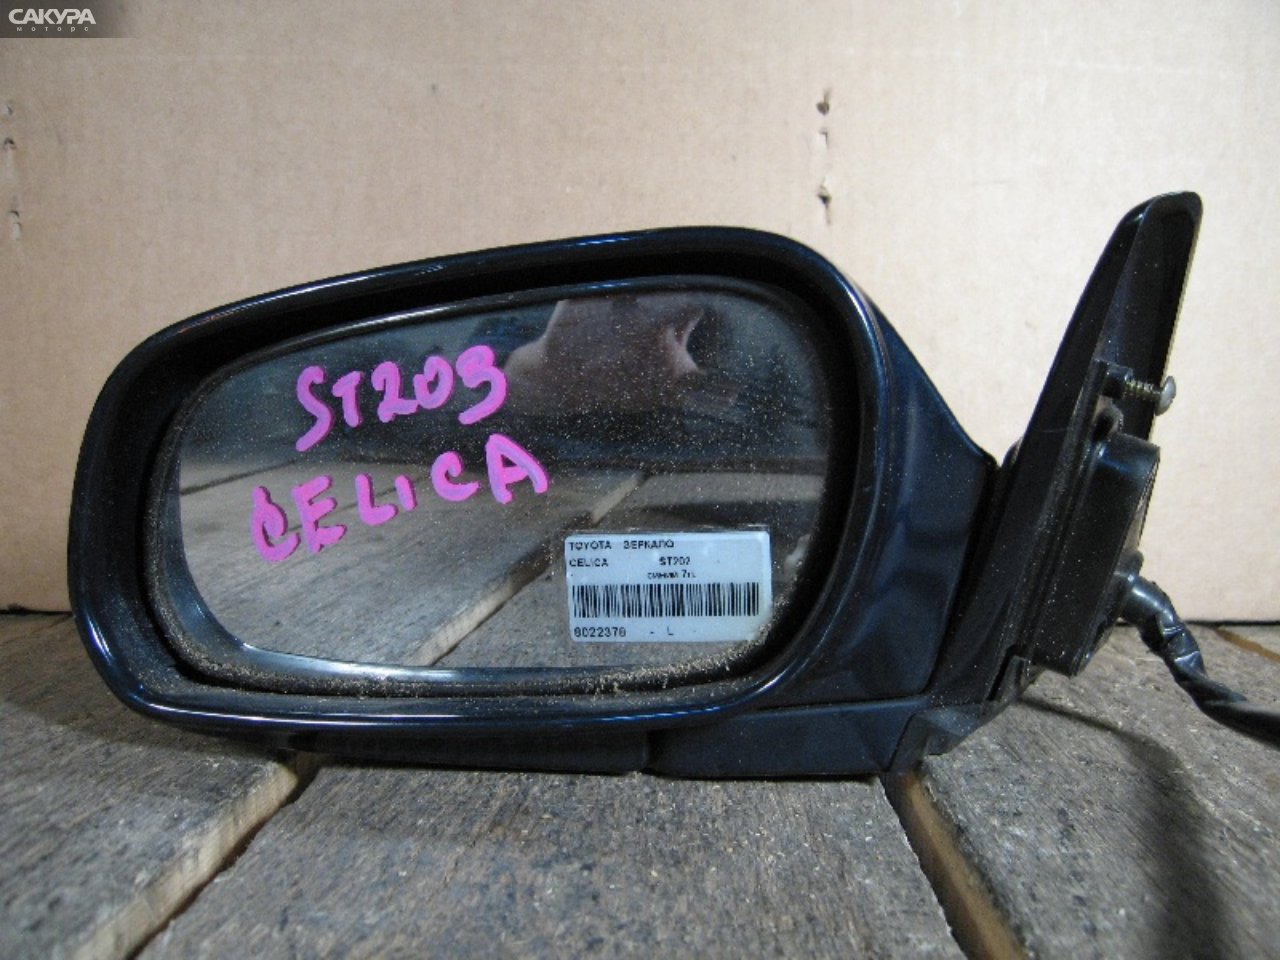 Зеркало боковое левое Toyota Celica ST202: купить в Сакура Абакан.